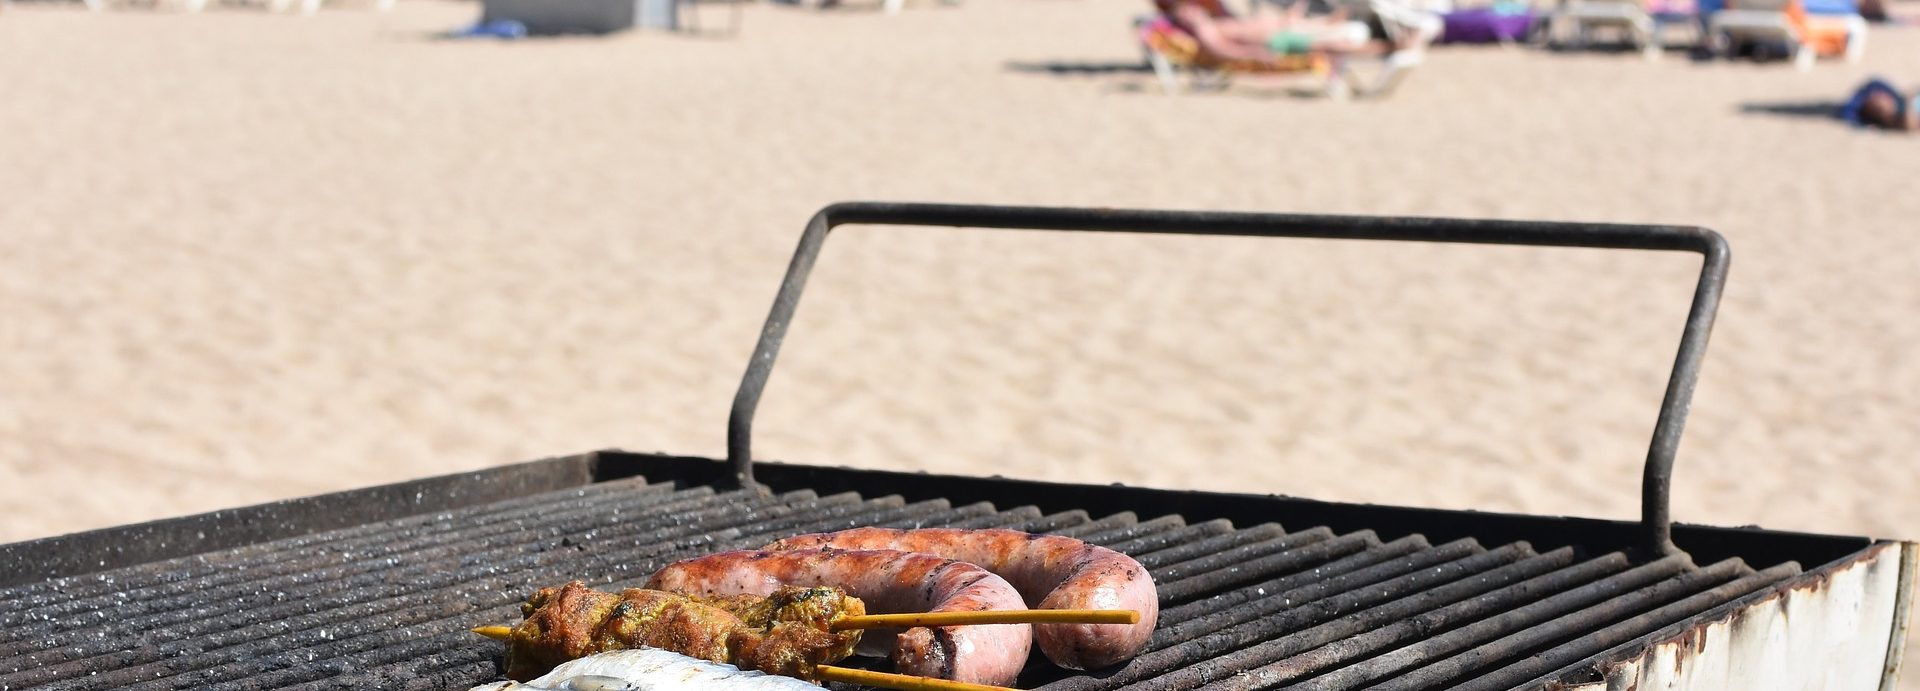 grill na plaży